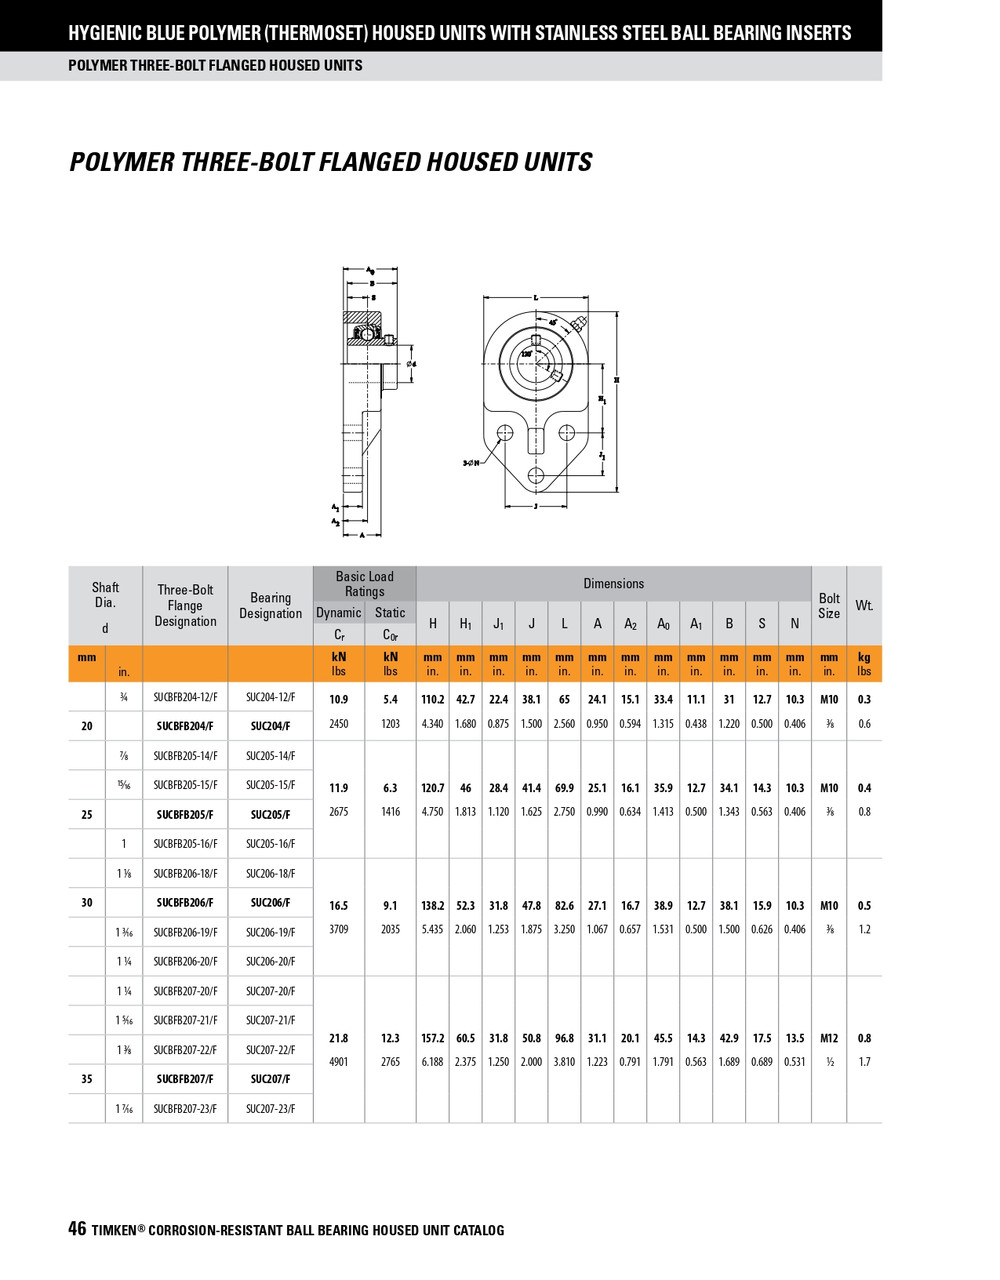 25mm Hygienic Polymer Set Screw Three-Bolt Flange Block Assembly   SUCBFB205/FVSL613